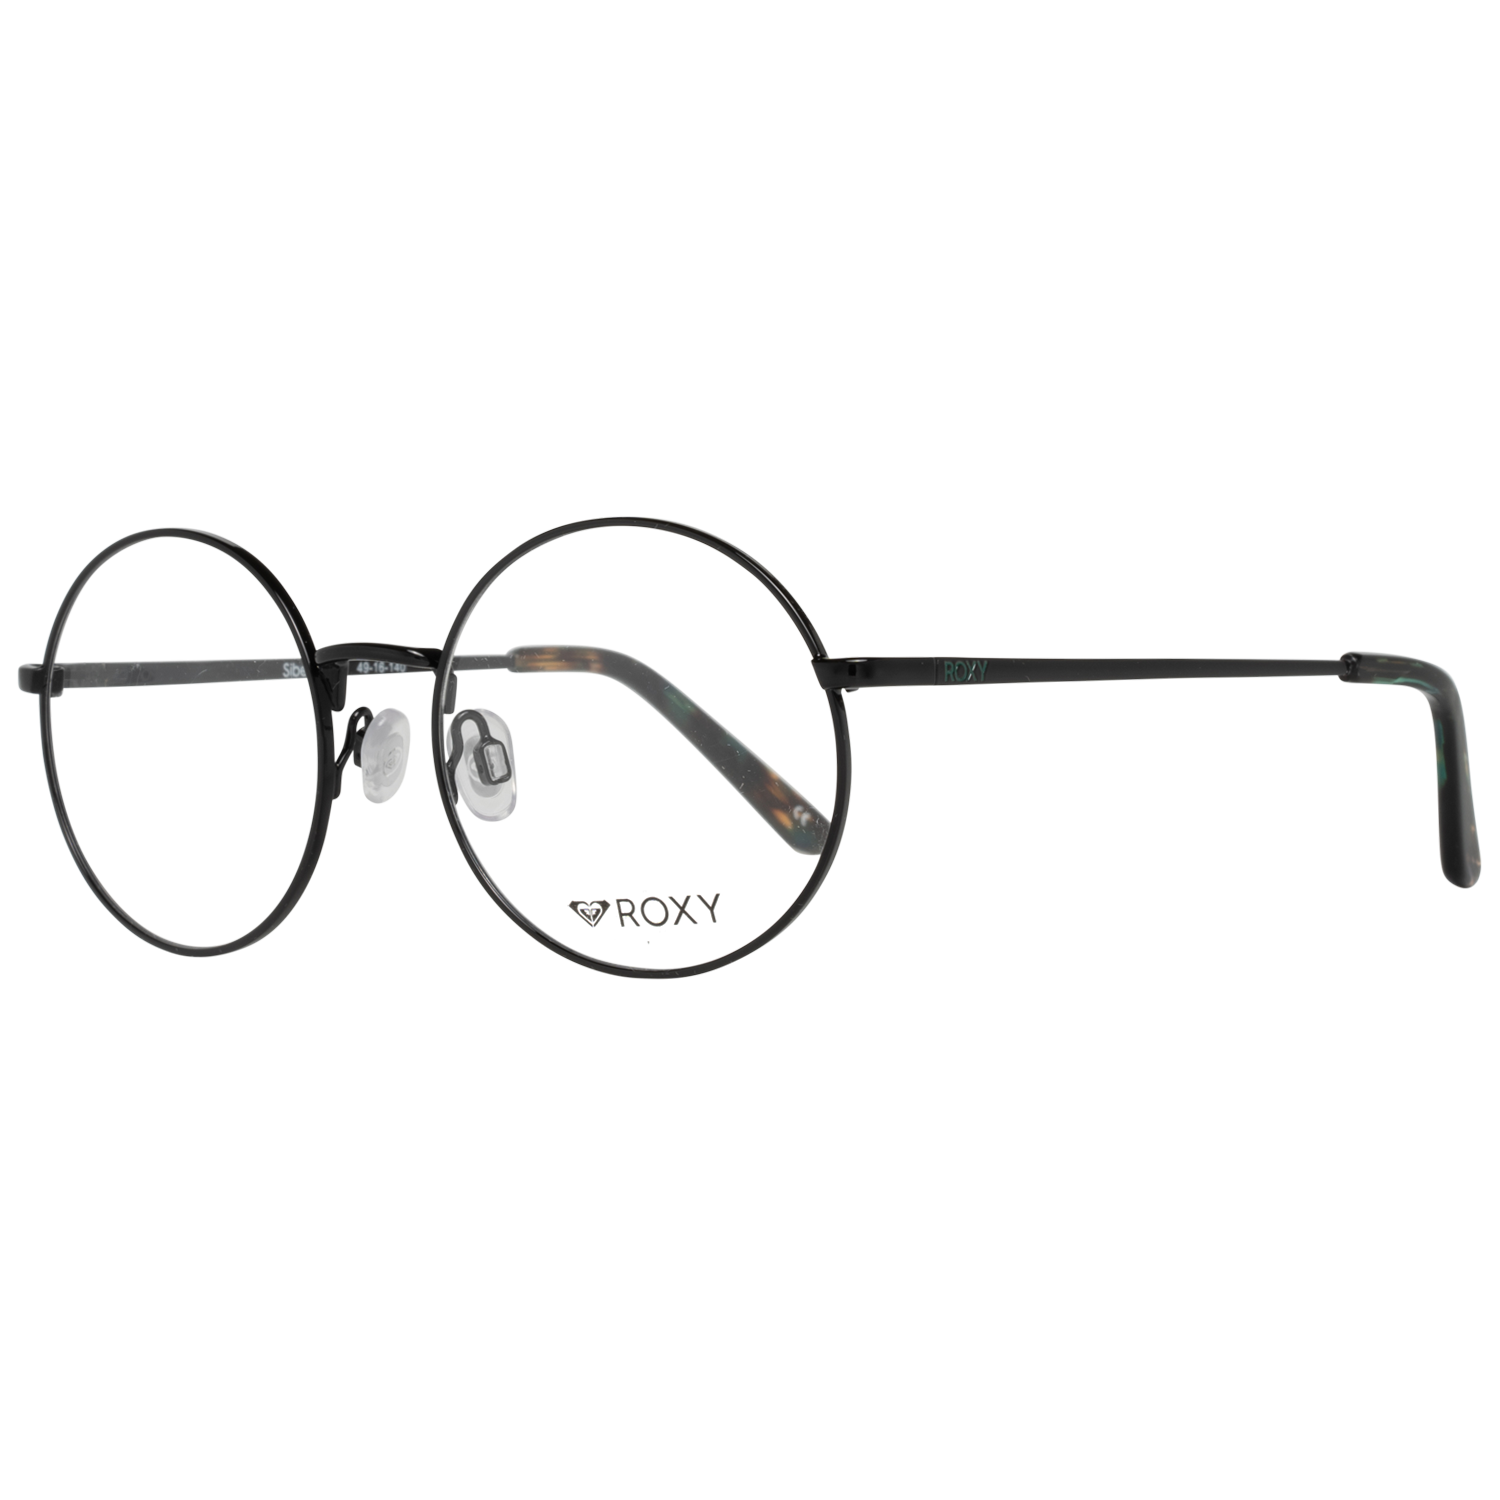 Roxy Frames Roxy Glasses Optical Frame ERJEG03034 DBLK 49 Eyeglasses Eyewear UK USA Australia 